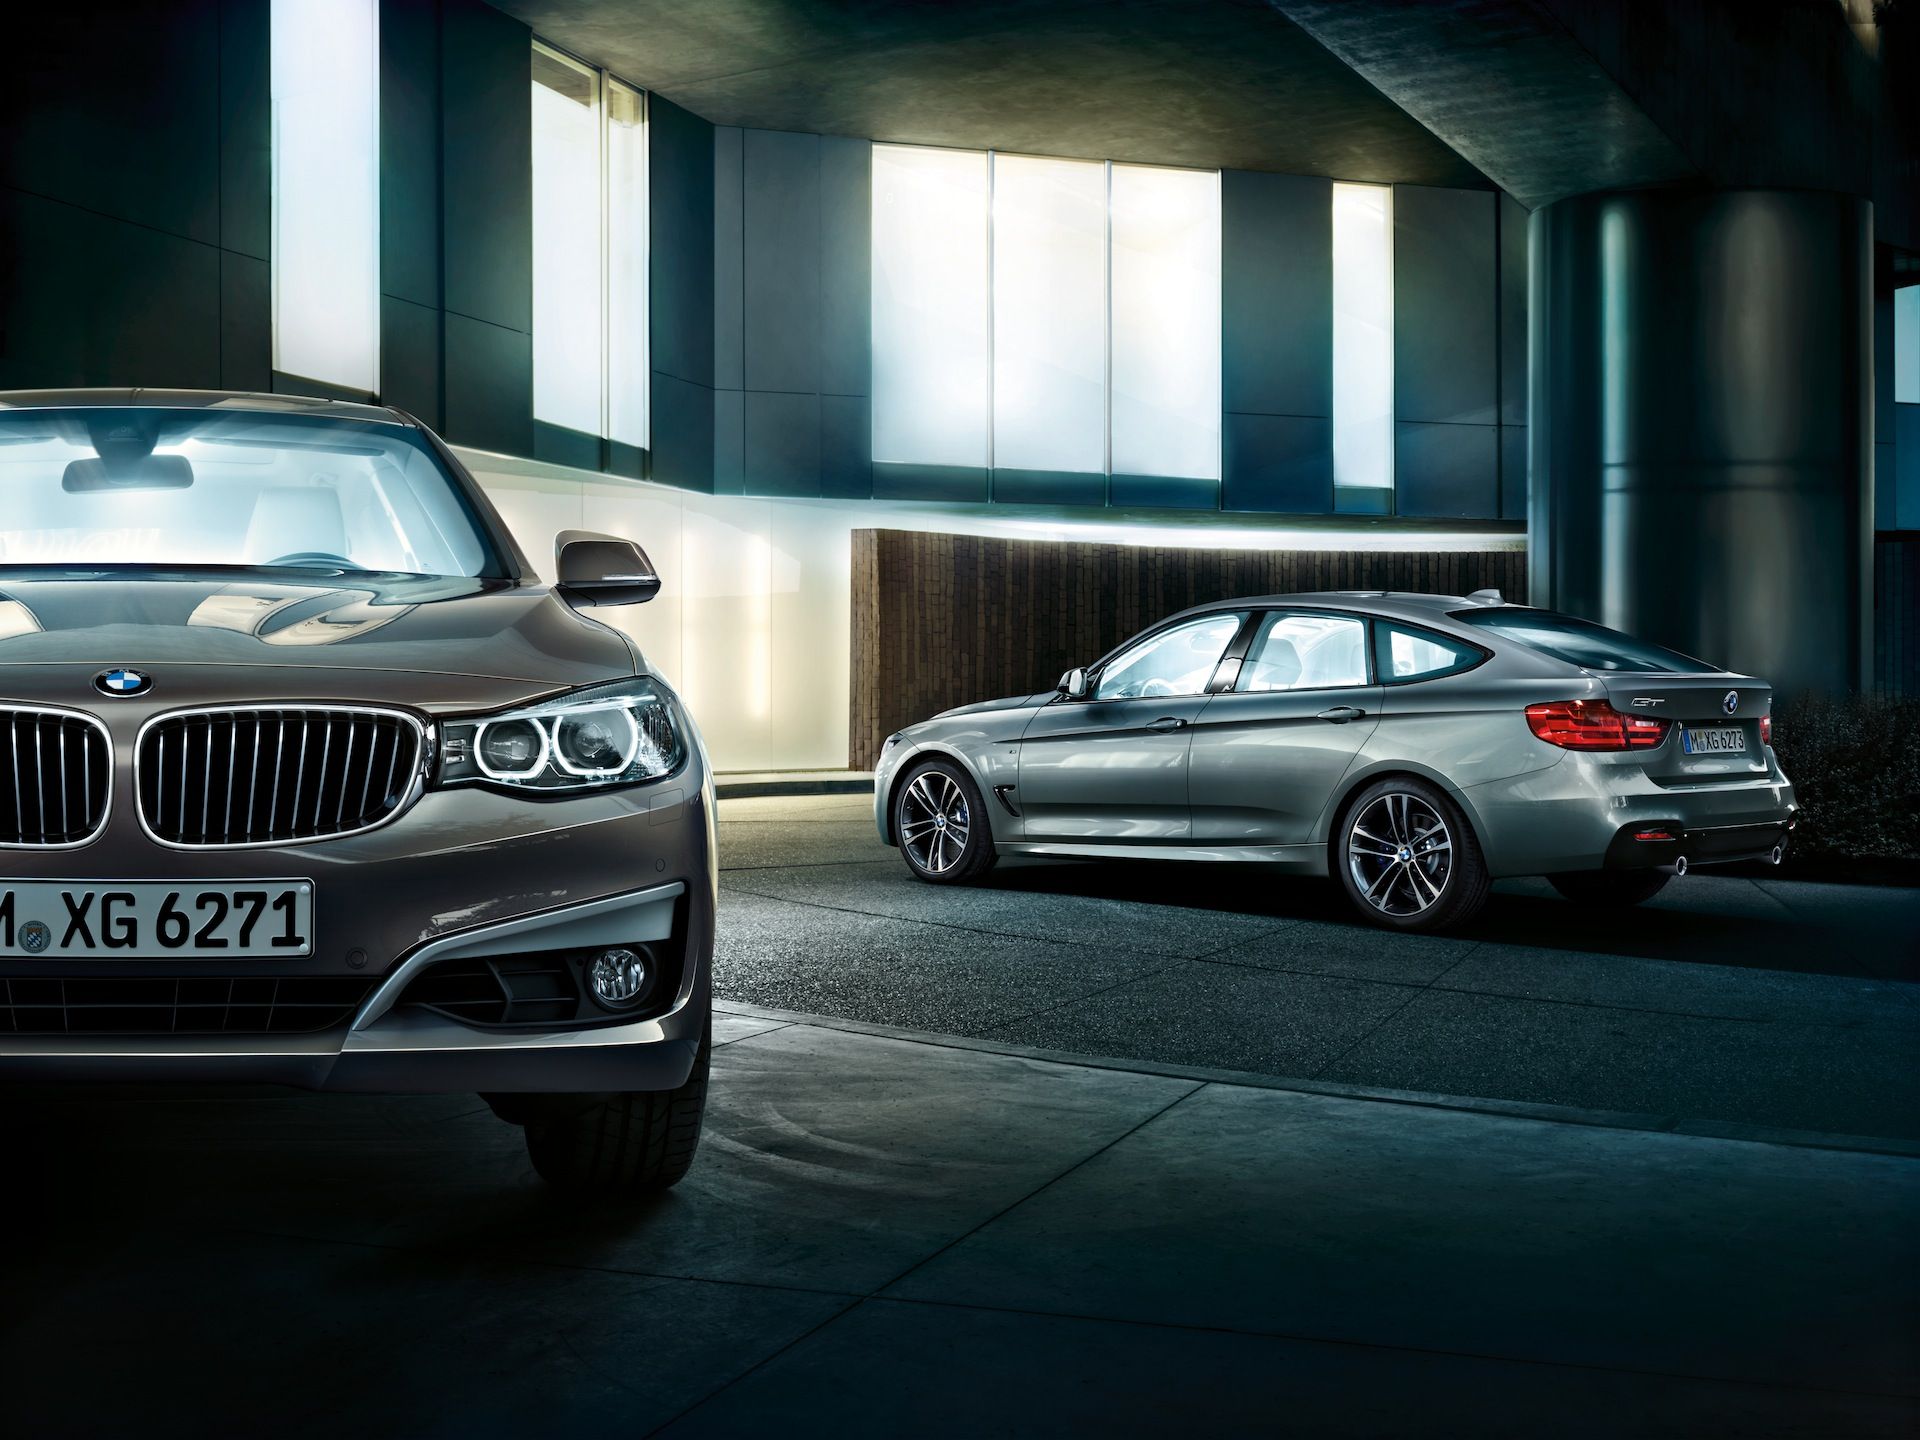 Wallpaper: BMW 3 Series Gran Turismo